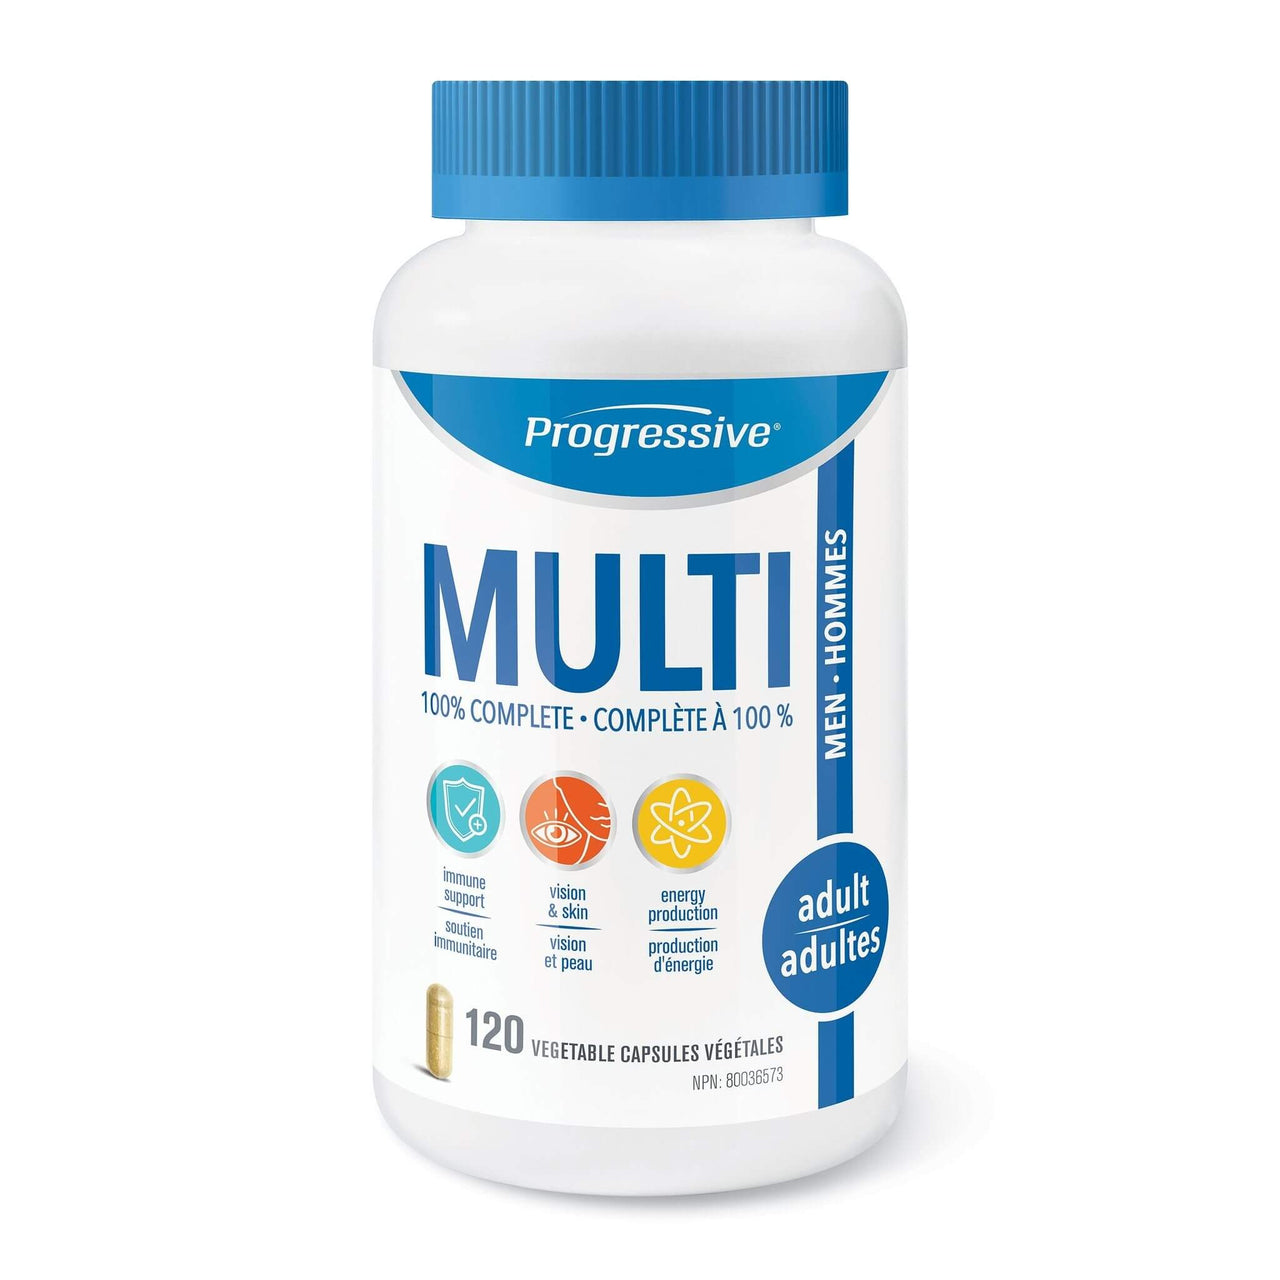 Progressive Multivitamin for Adult Men 120 Veg Capsules - Nutrition Plus